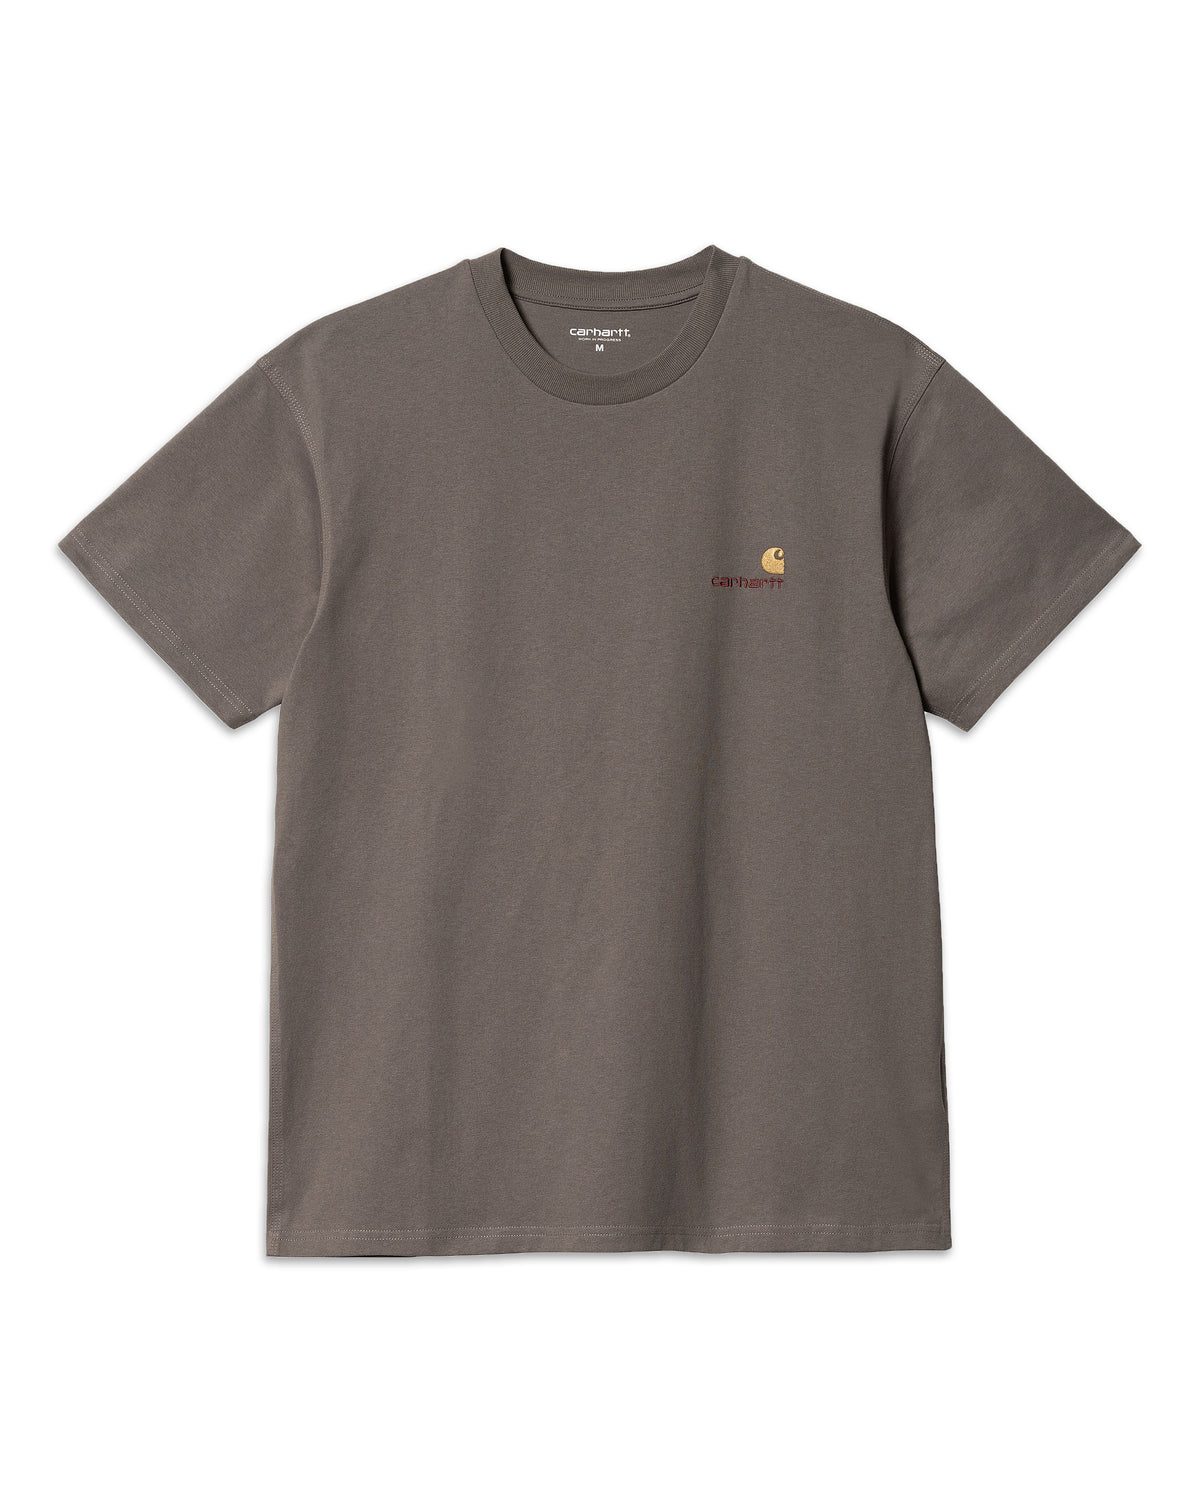 Carhartt Wip American Script T-Shirt Teide